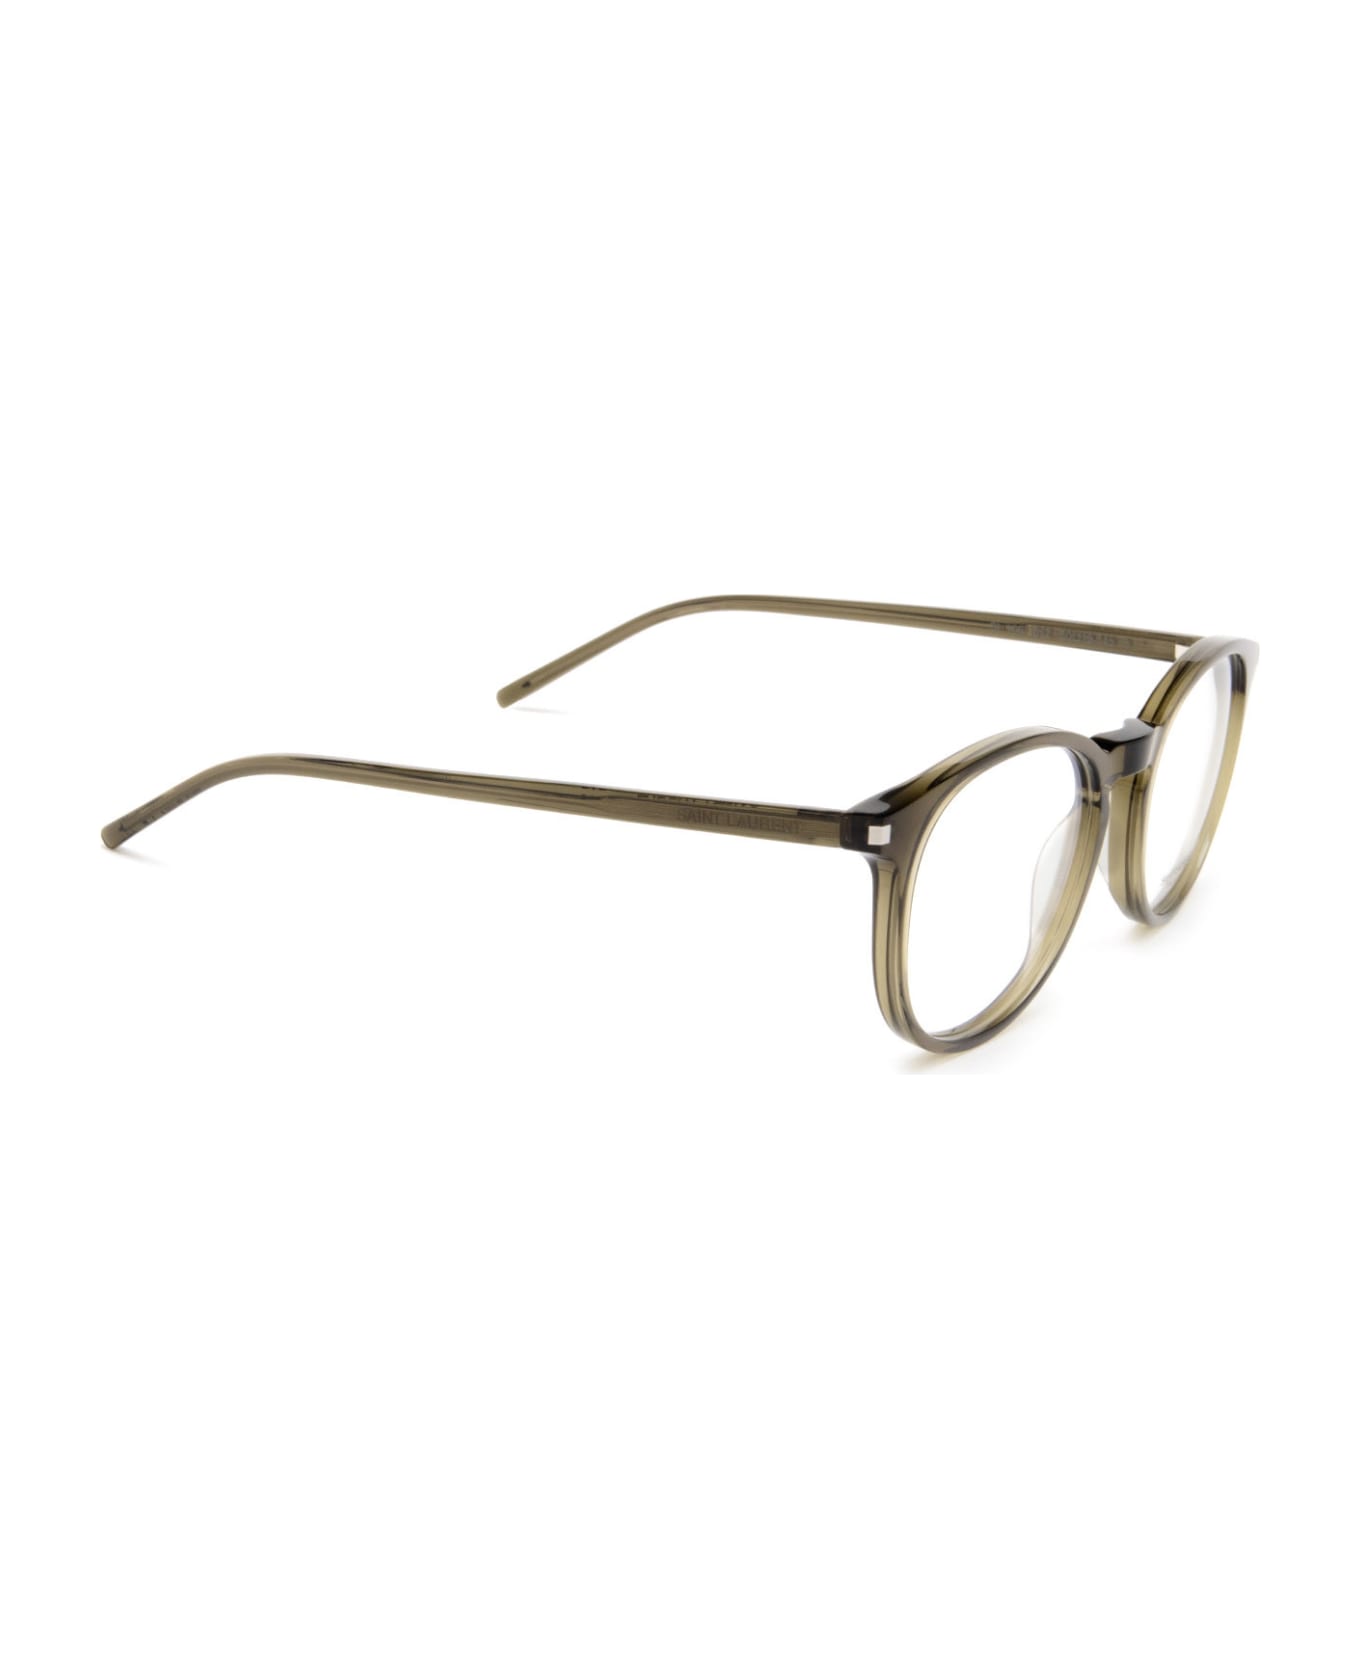 Saint Laurent Eyewear Sl 106 Green Glasses - Green